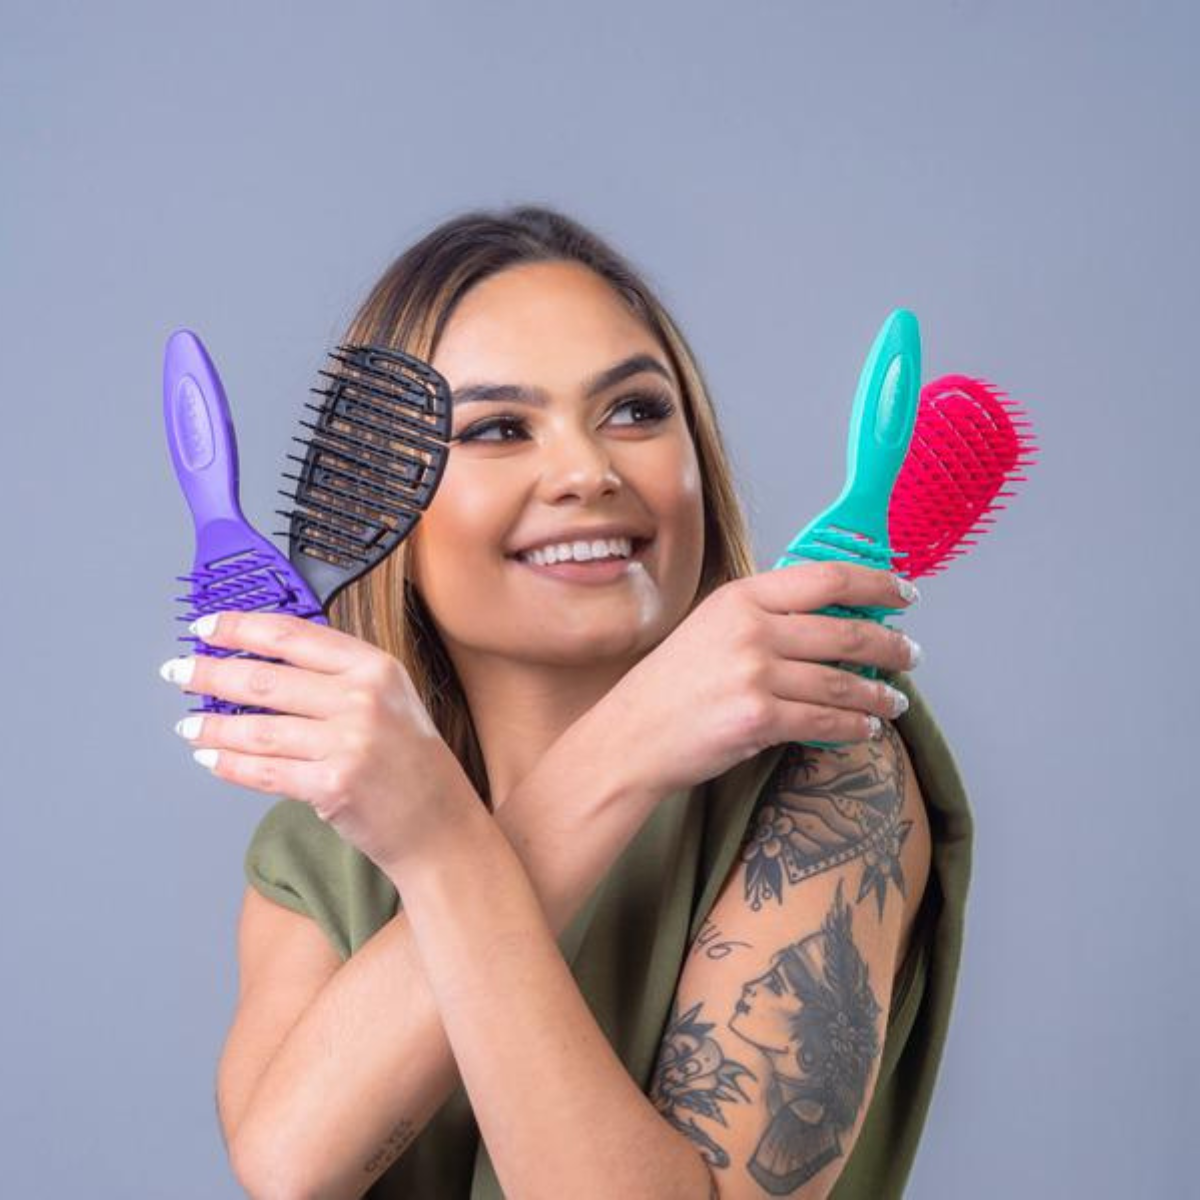 Dompel Maya Hair Brush Set - 4 Piece Set (Green, Pink, Purple, Black) - Antistatic Brush for All Hair Types.